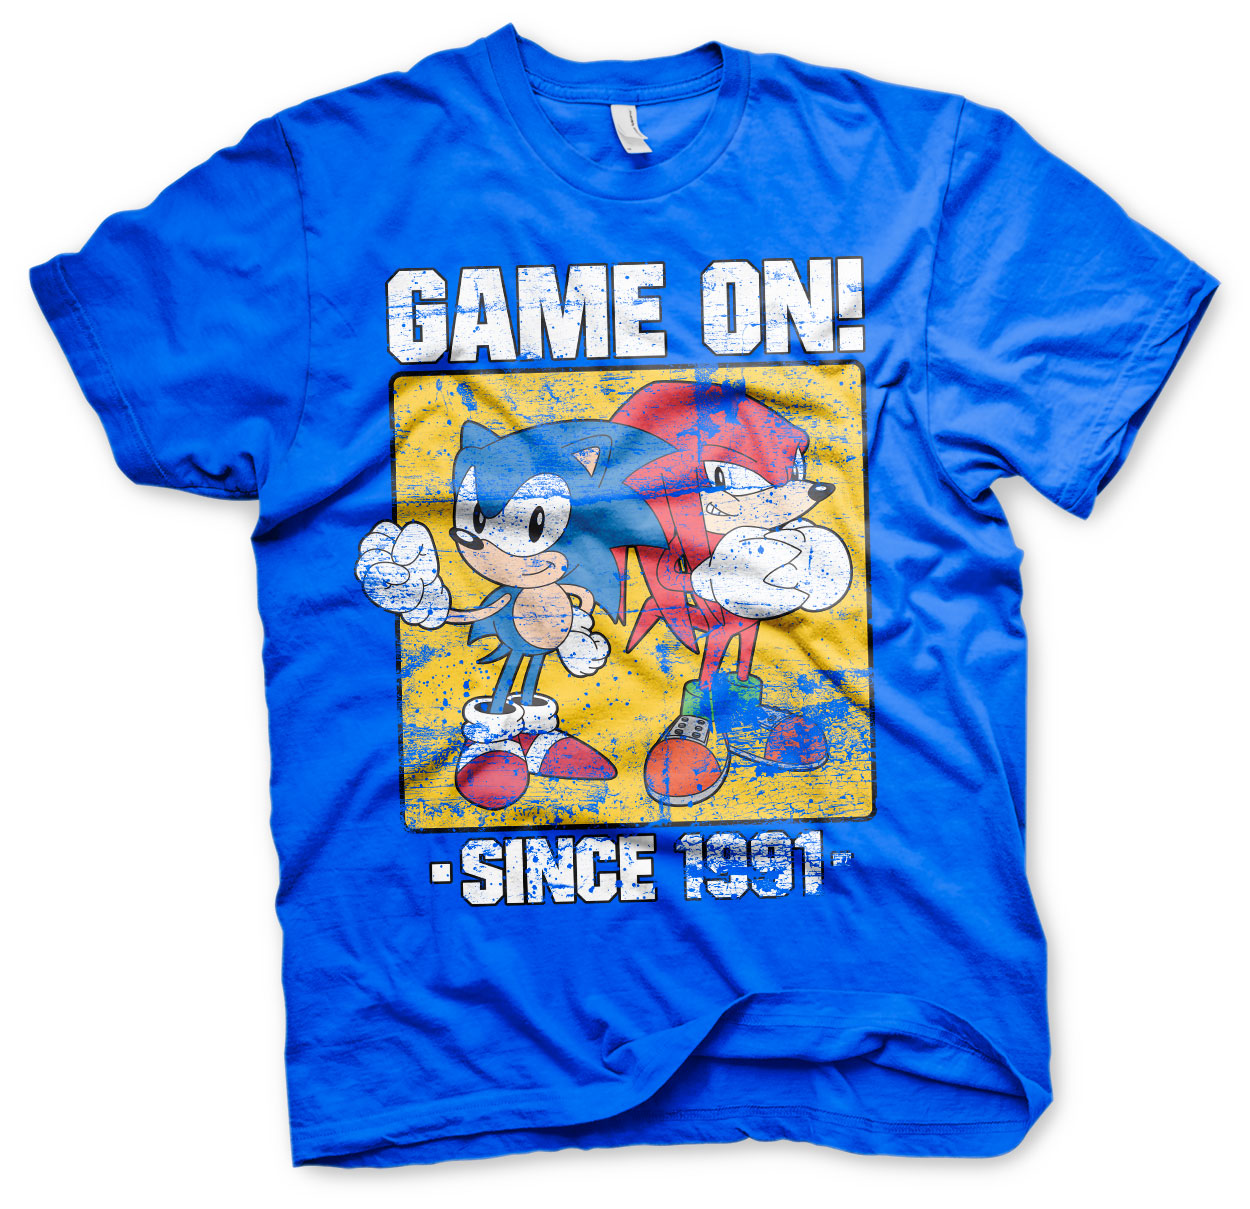 Tričko Sonic The Hedgehog - Game On Since 1991